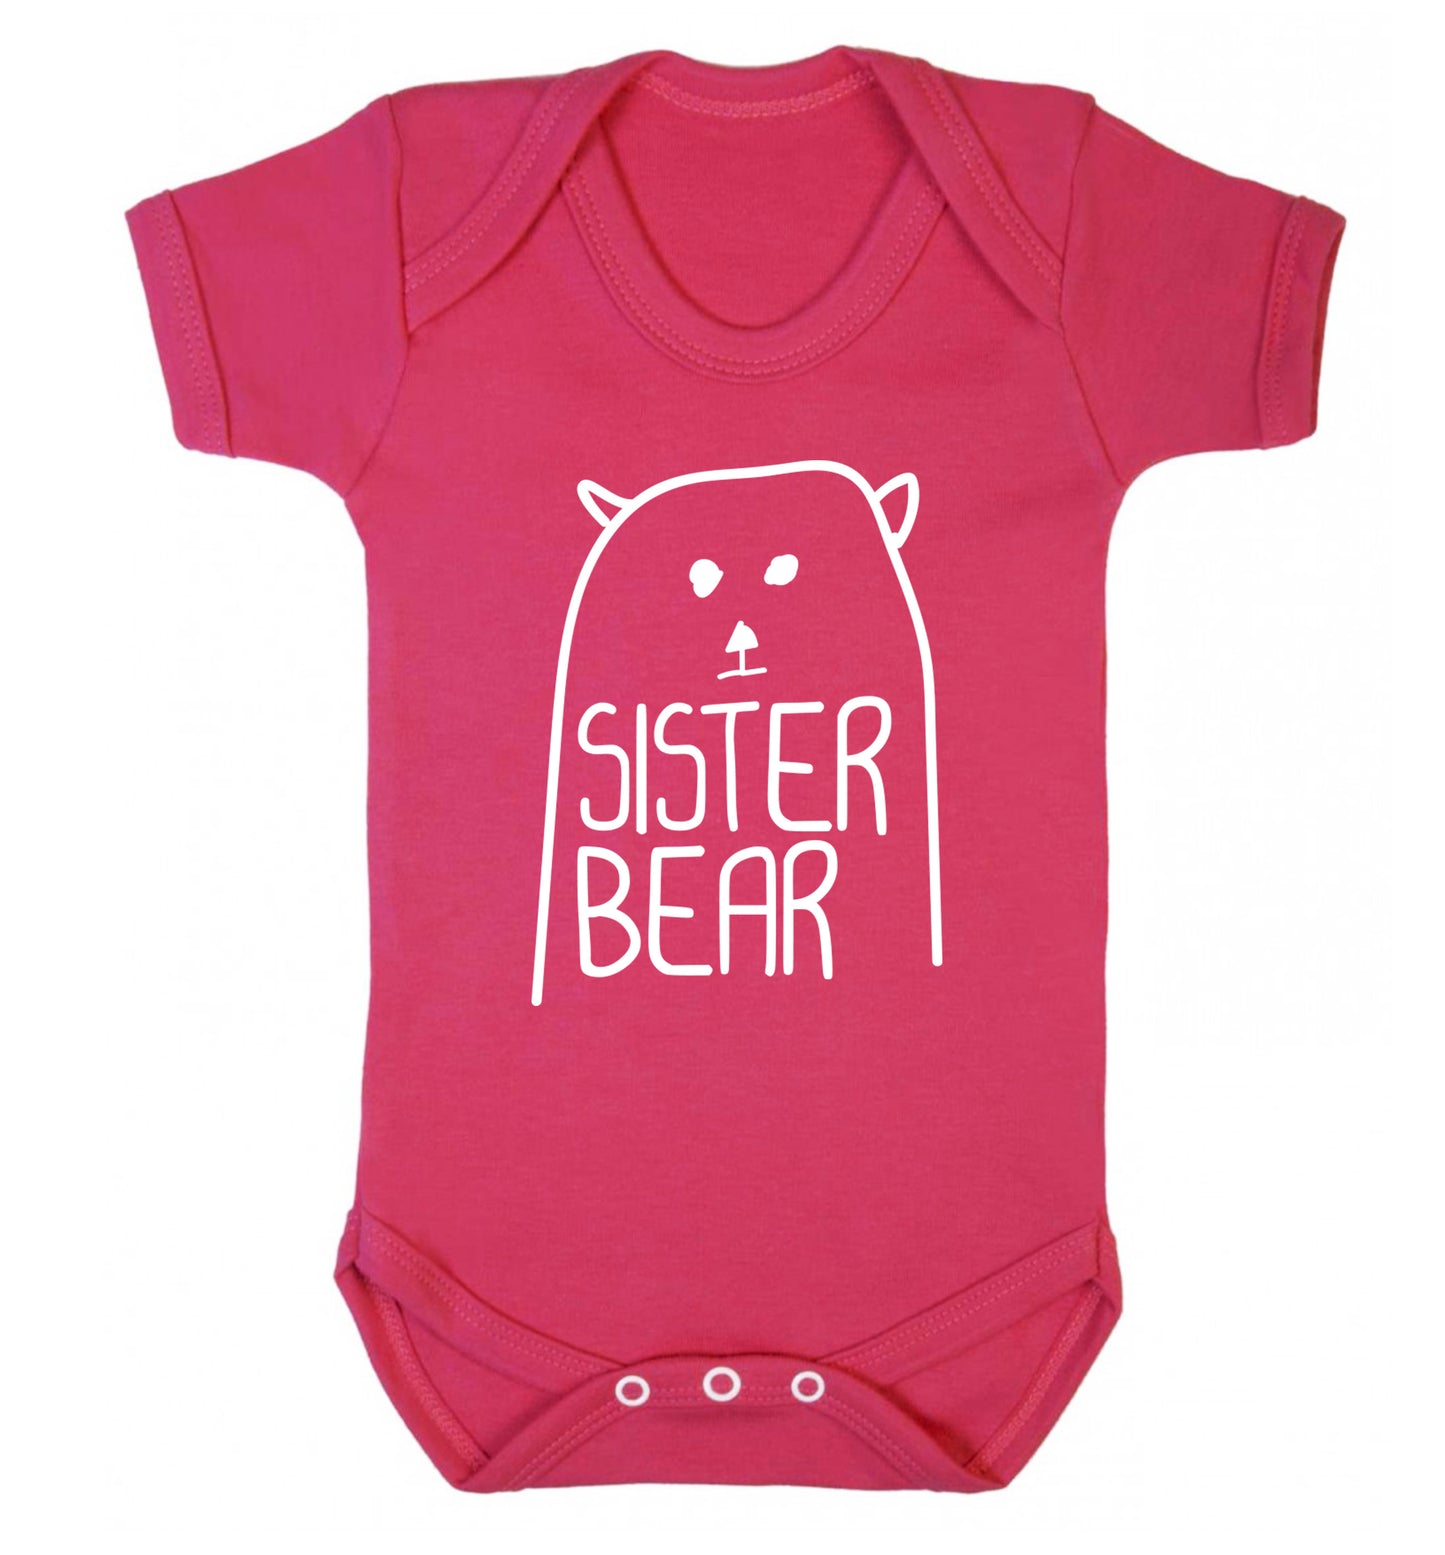 Sister bear Baby Vest dark pink 18-24 months